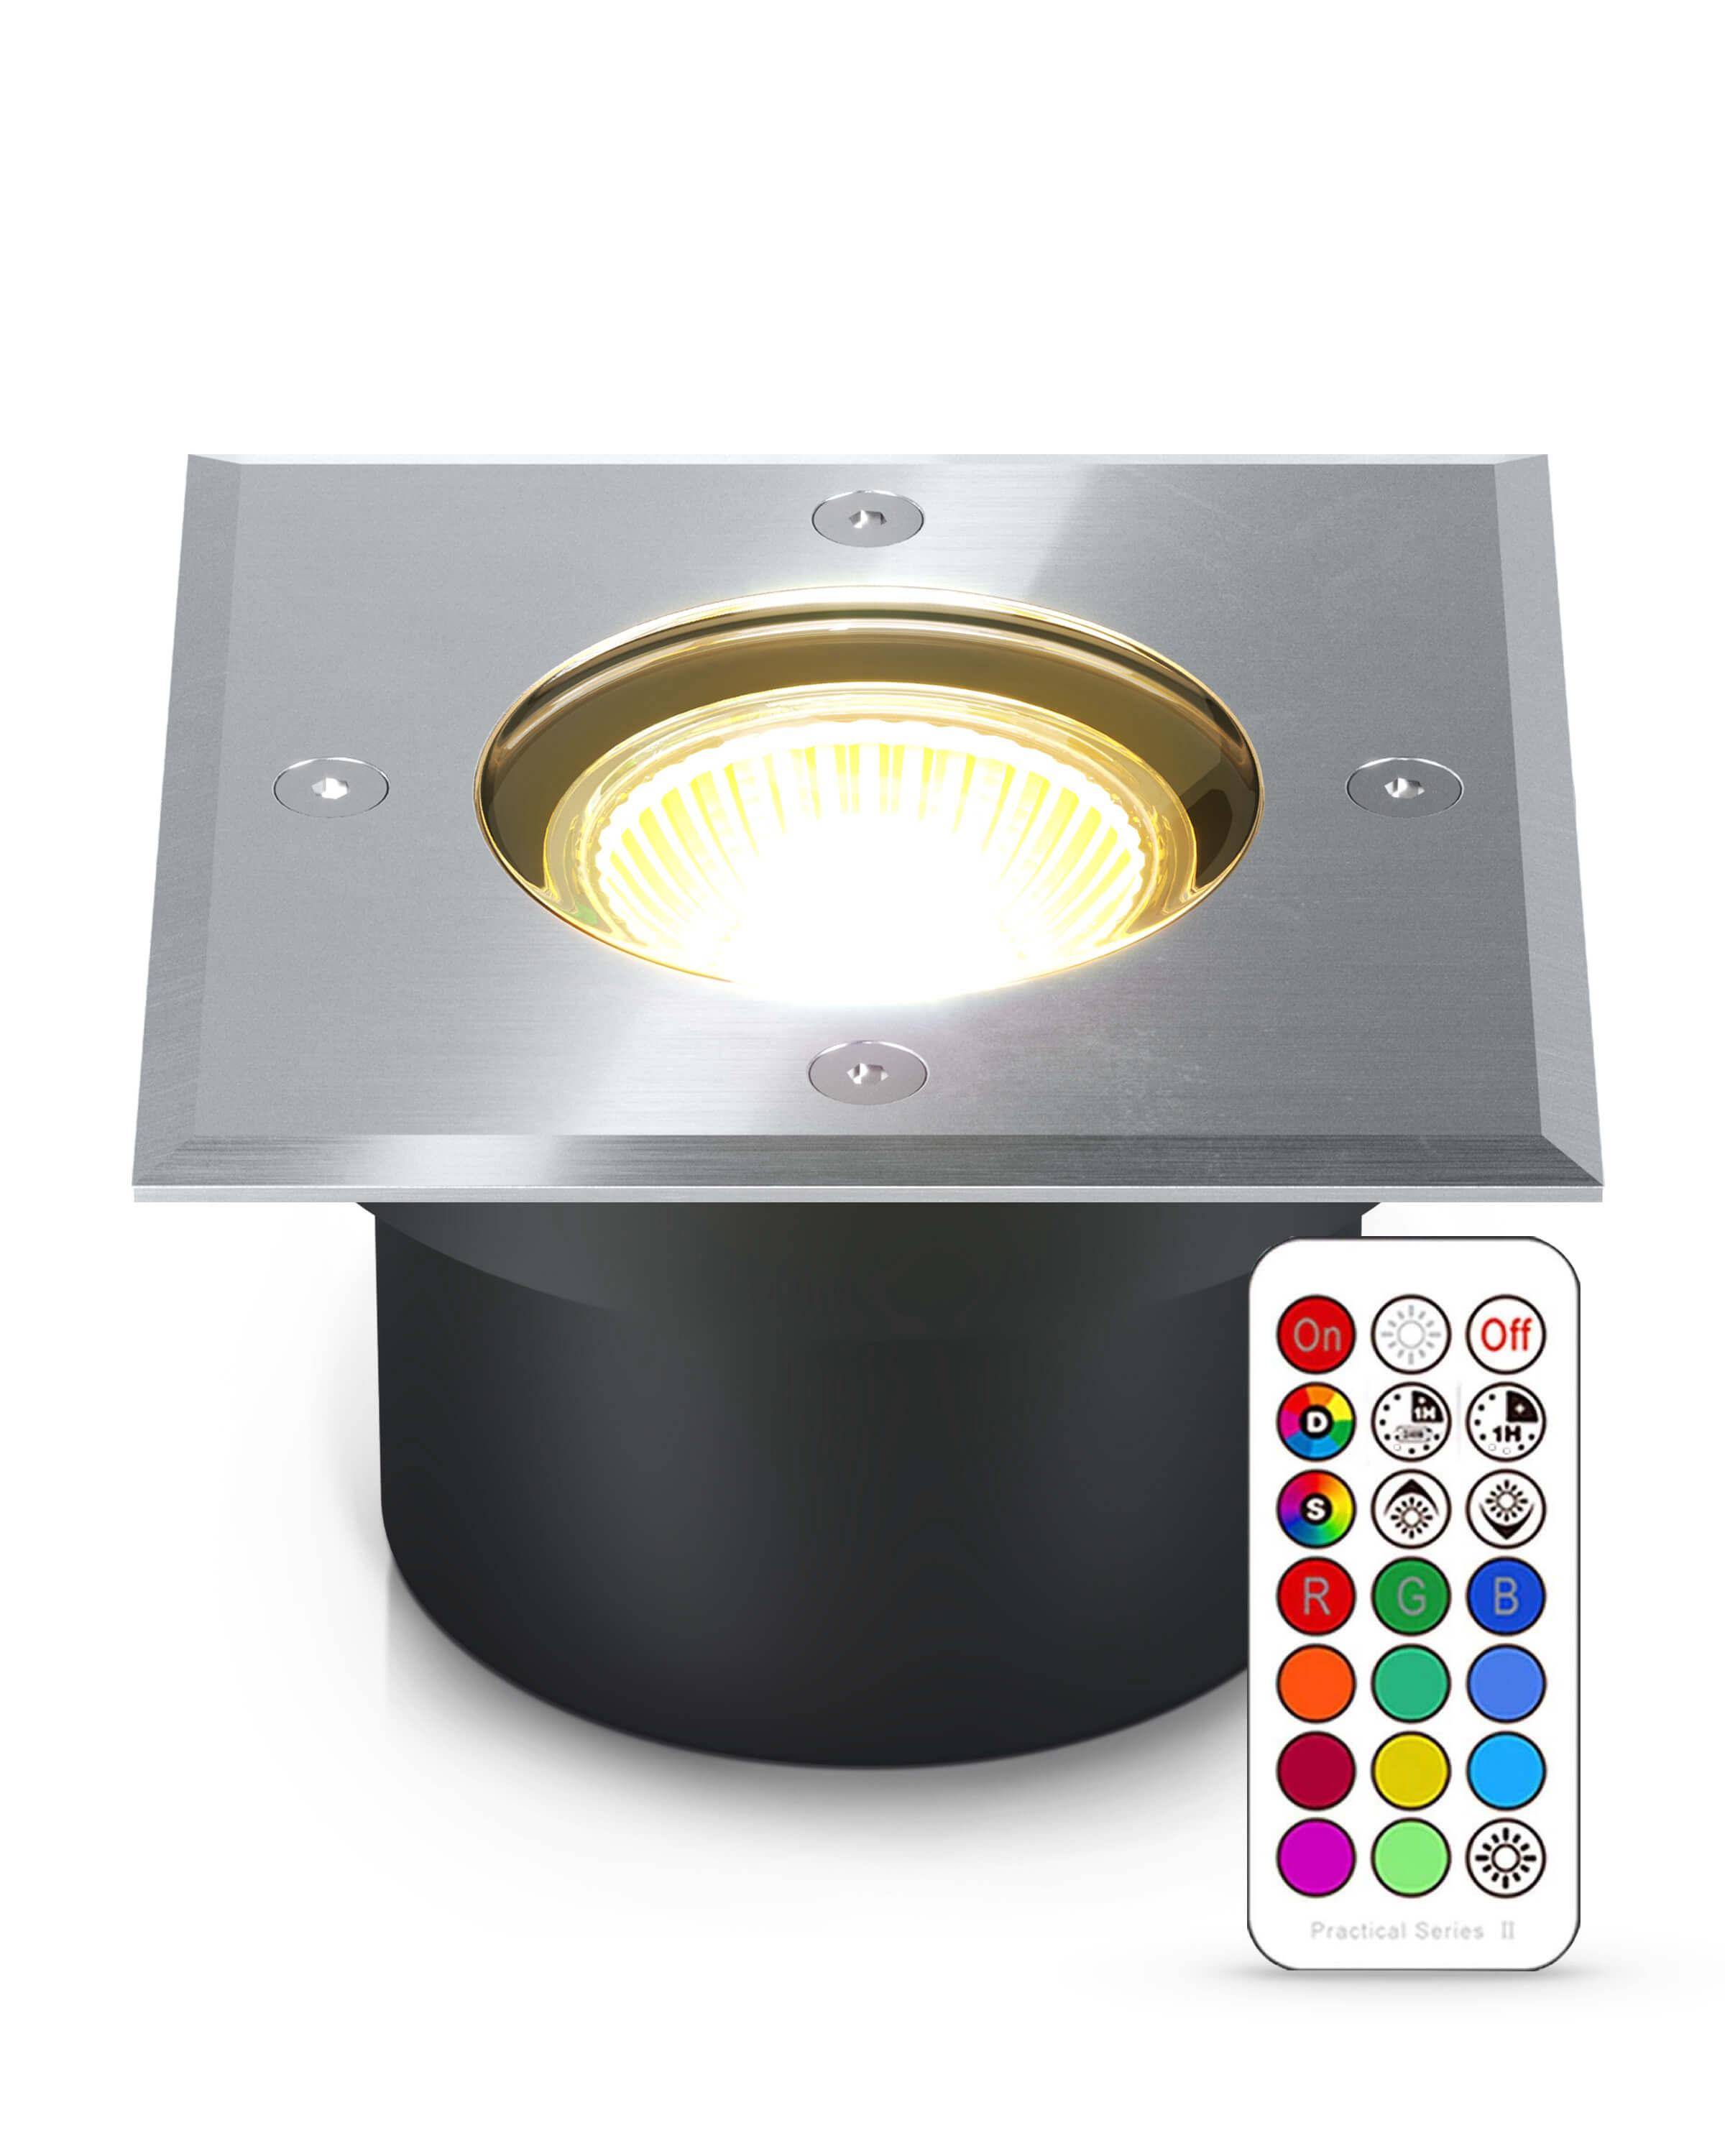 Flacher LED Bodeneinbaustrahler IP67 mit RGB Farbwechsel - Edelstahl gebürstet Eckig